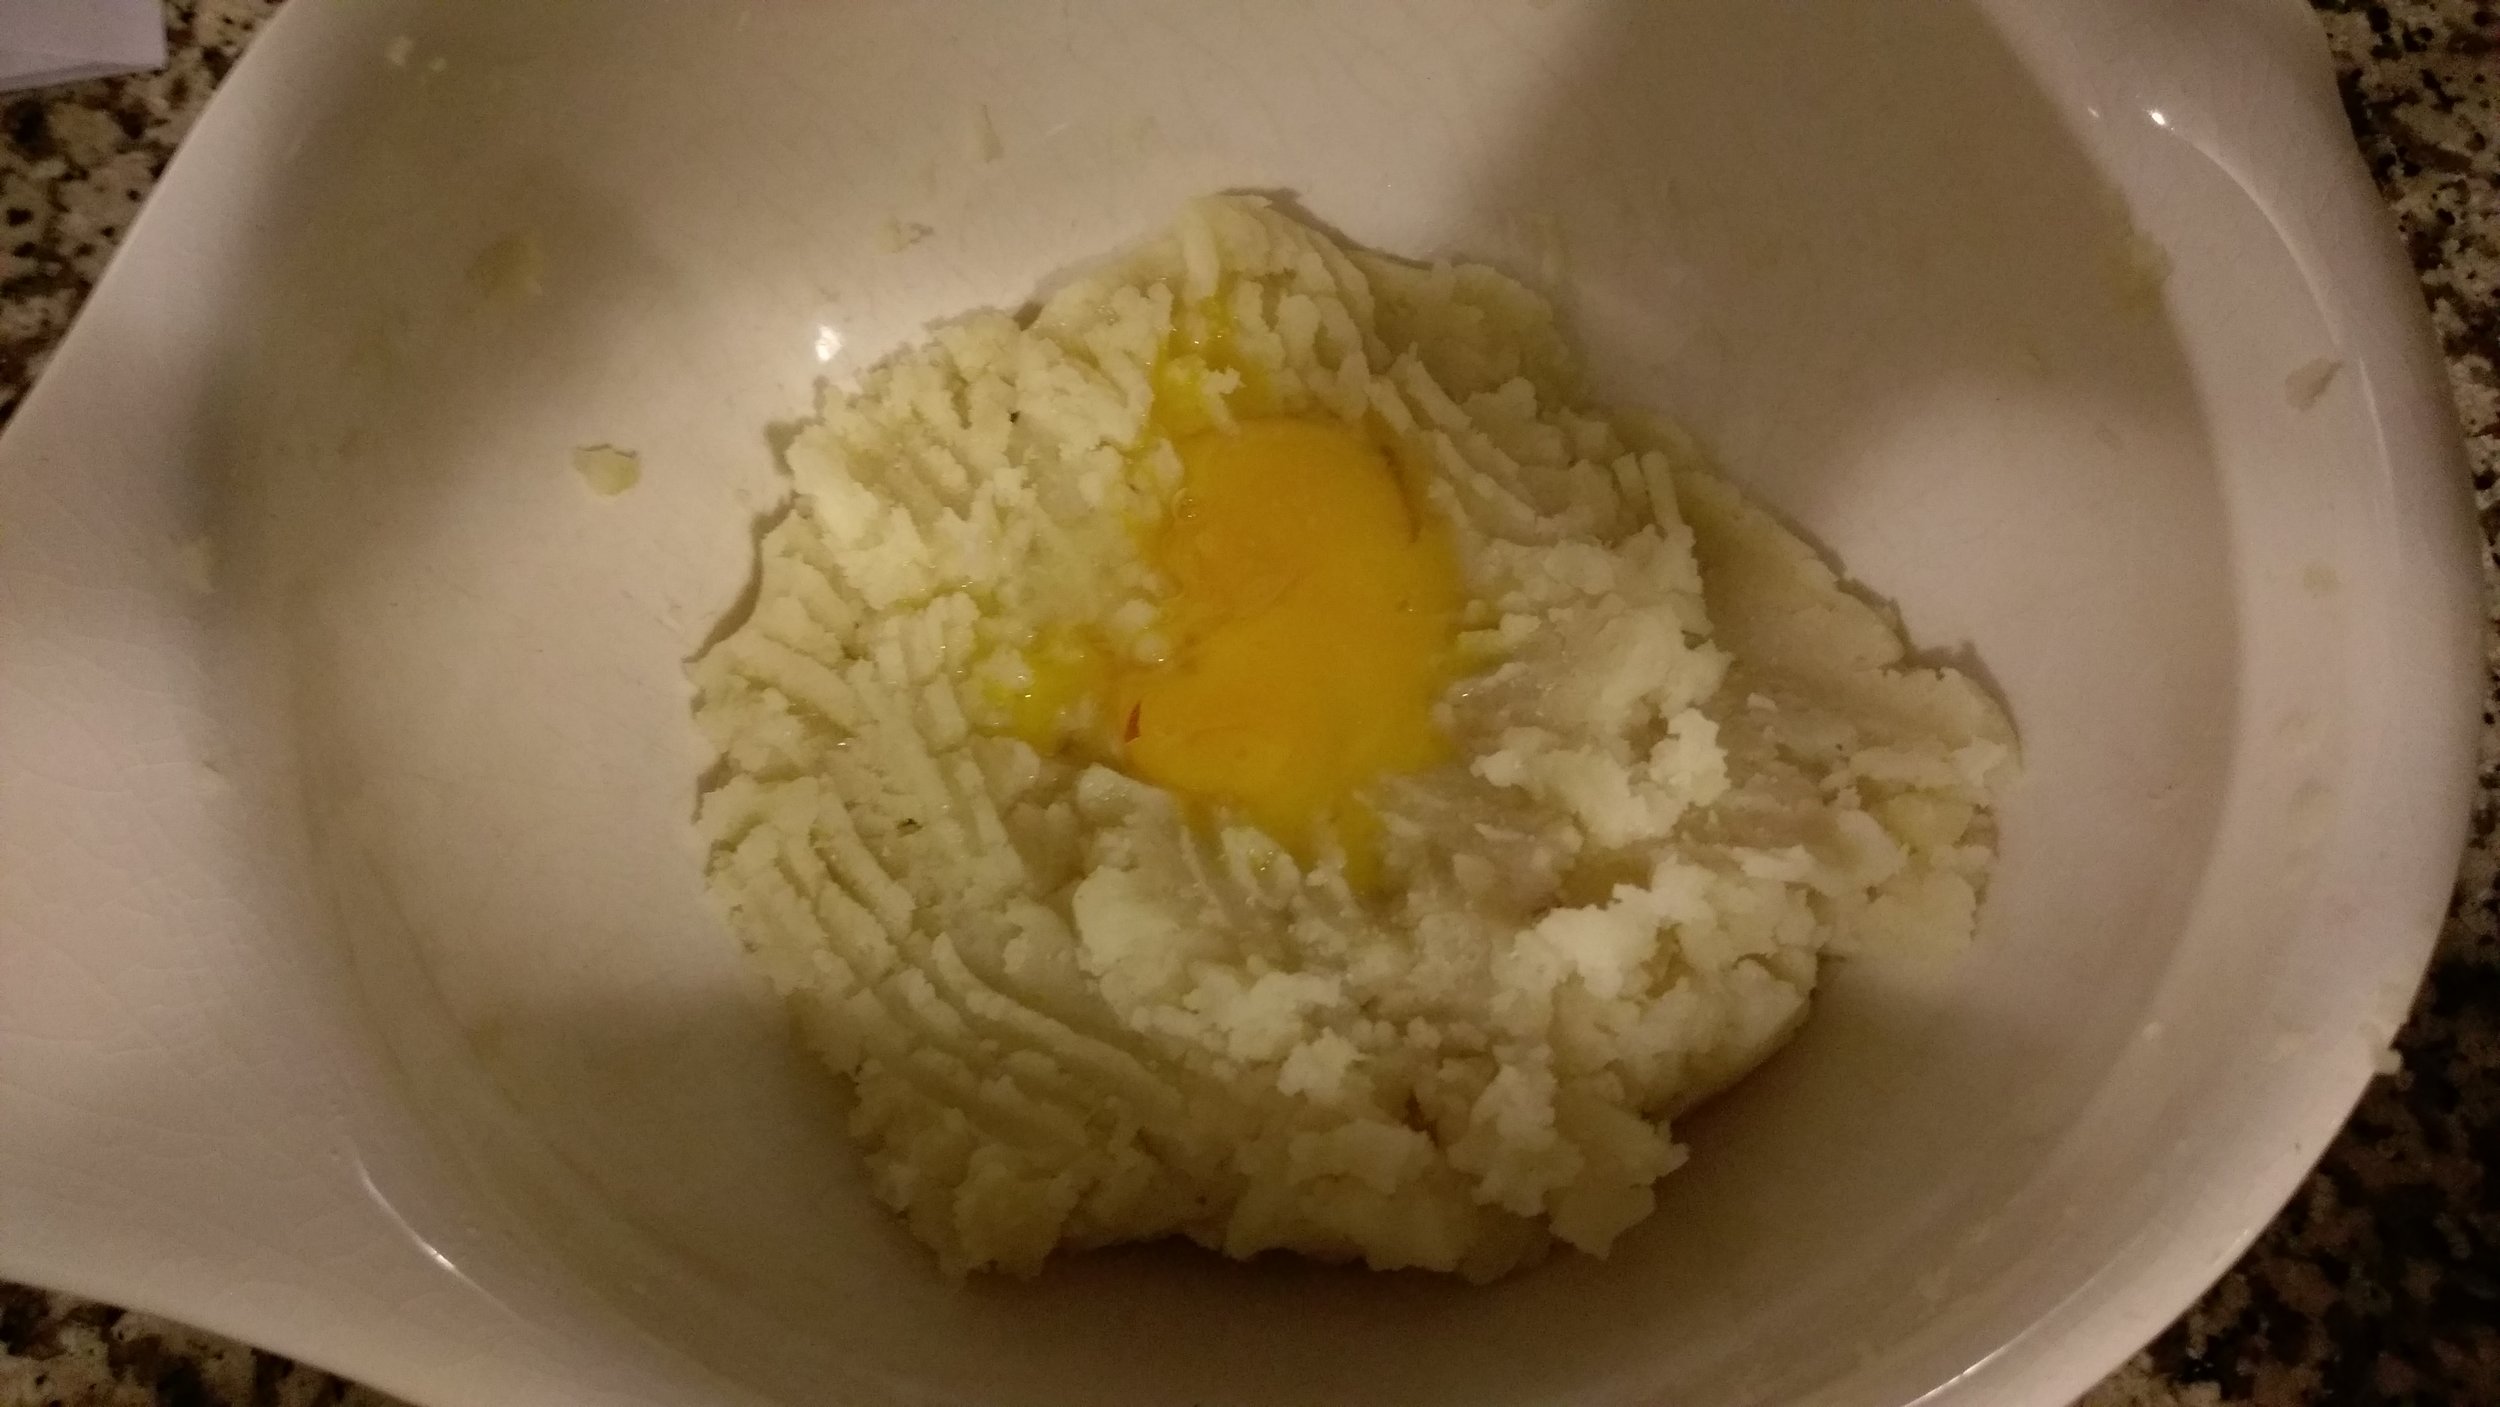 Add the egg yolks and flour